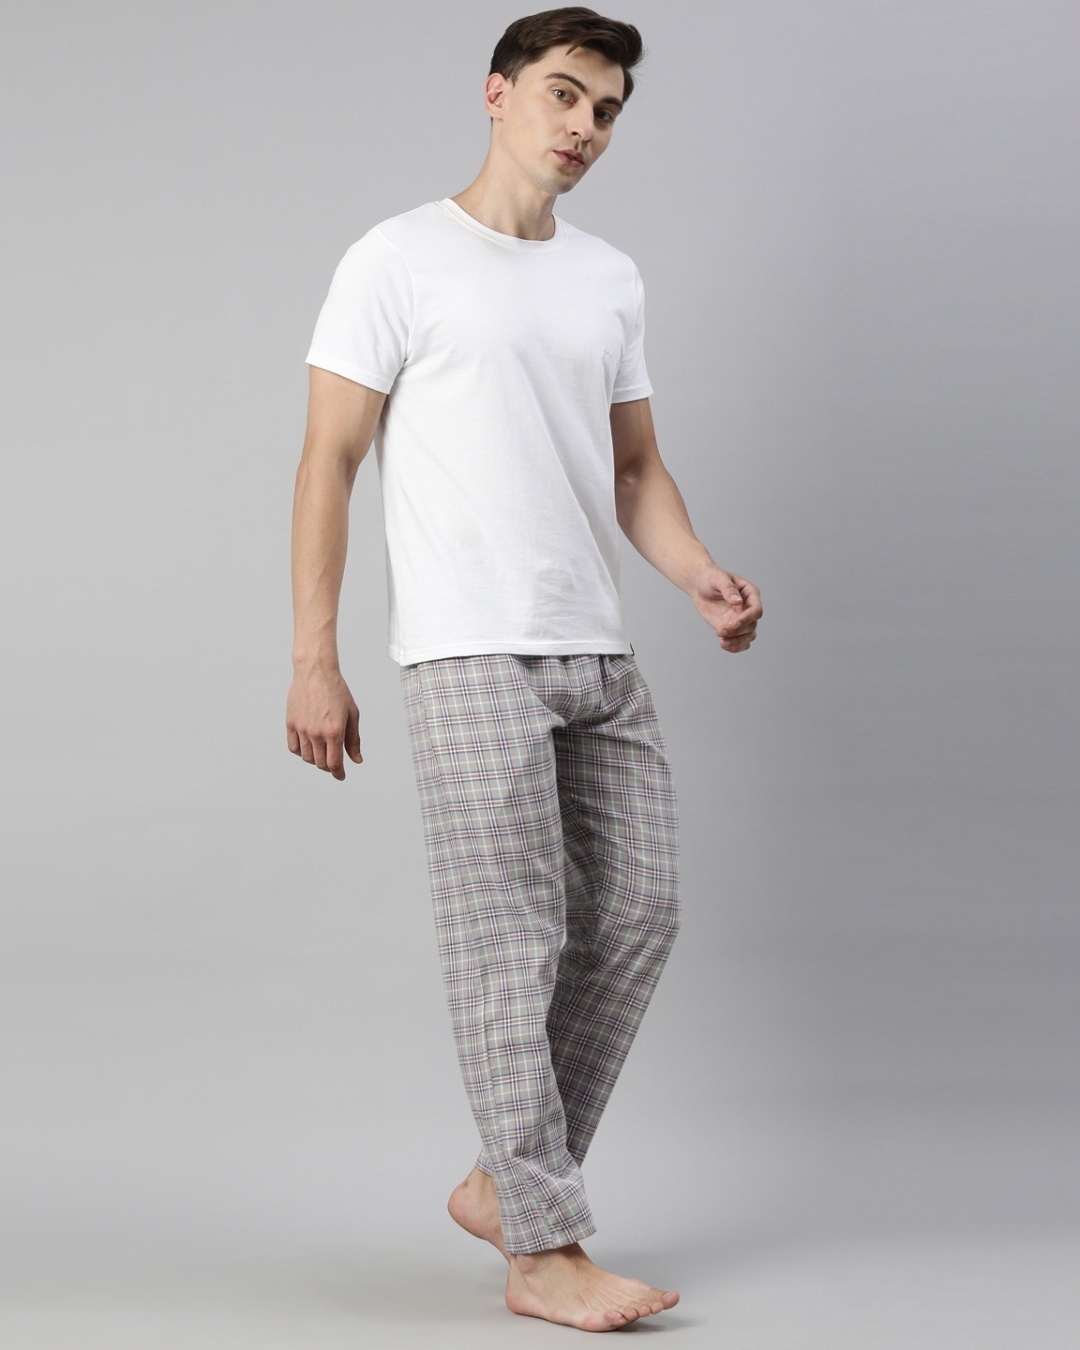 Buy Men's White & Grey Checked Cotton T-shirt & Pyjamas Set Online in ...